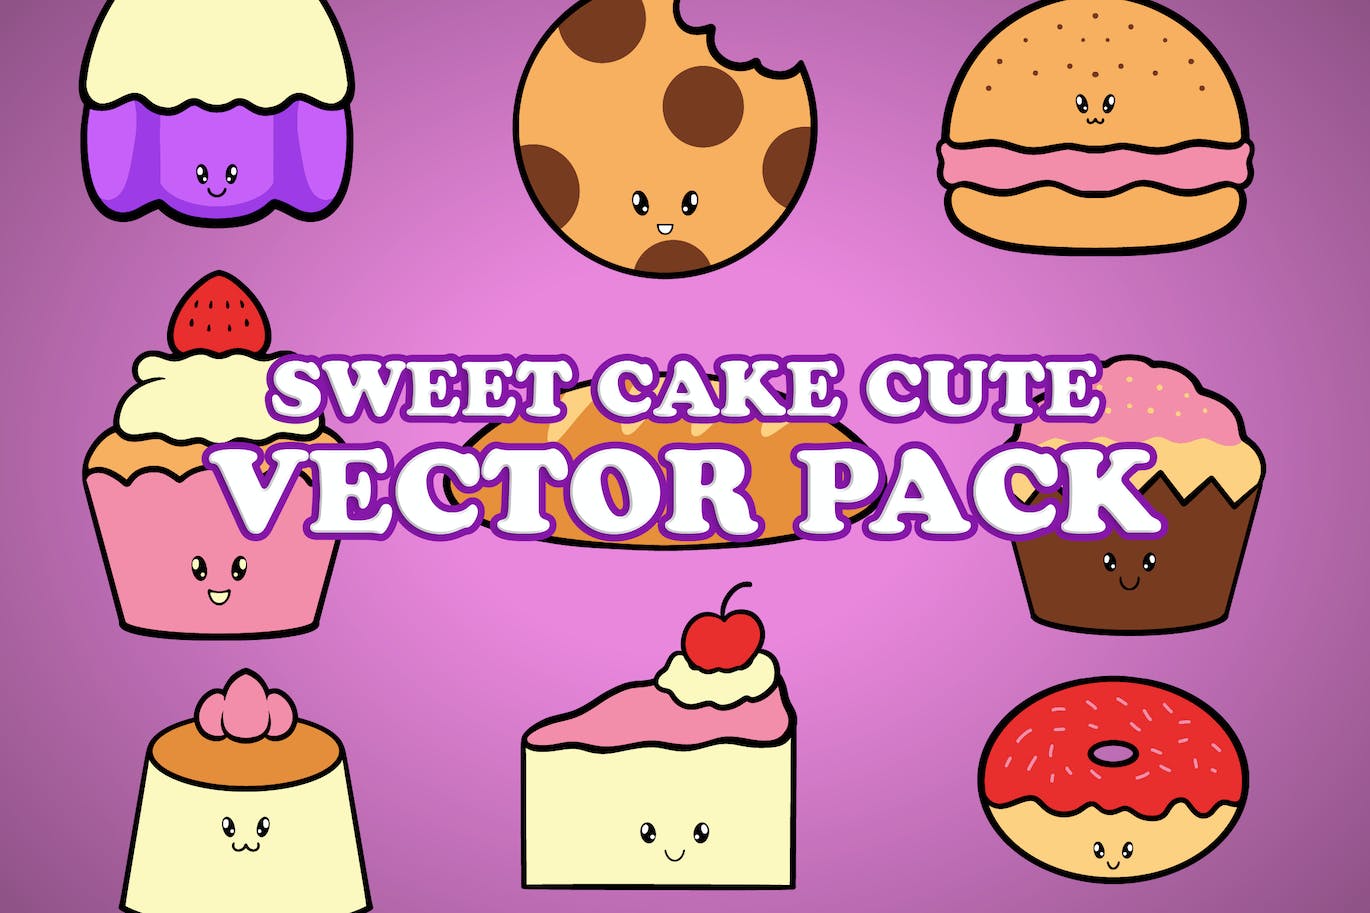 可爱的蛋糕卡通插画矢量素材 Cute Cake Cartoon Illustration Vector Pack-1